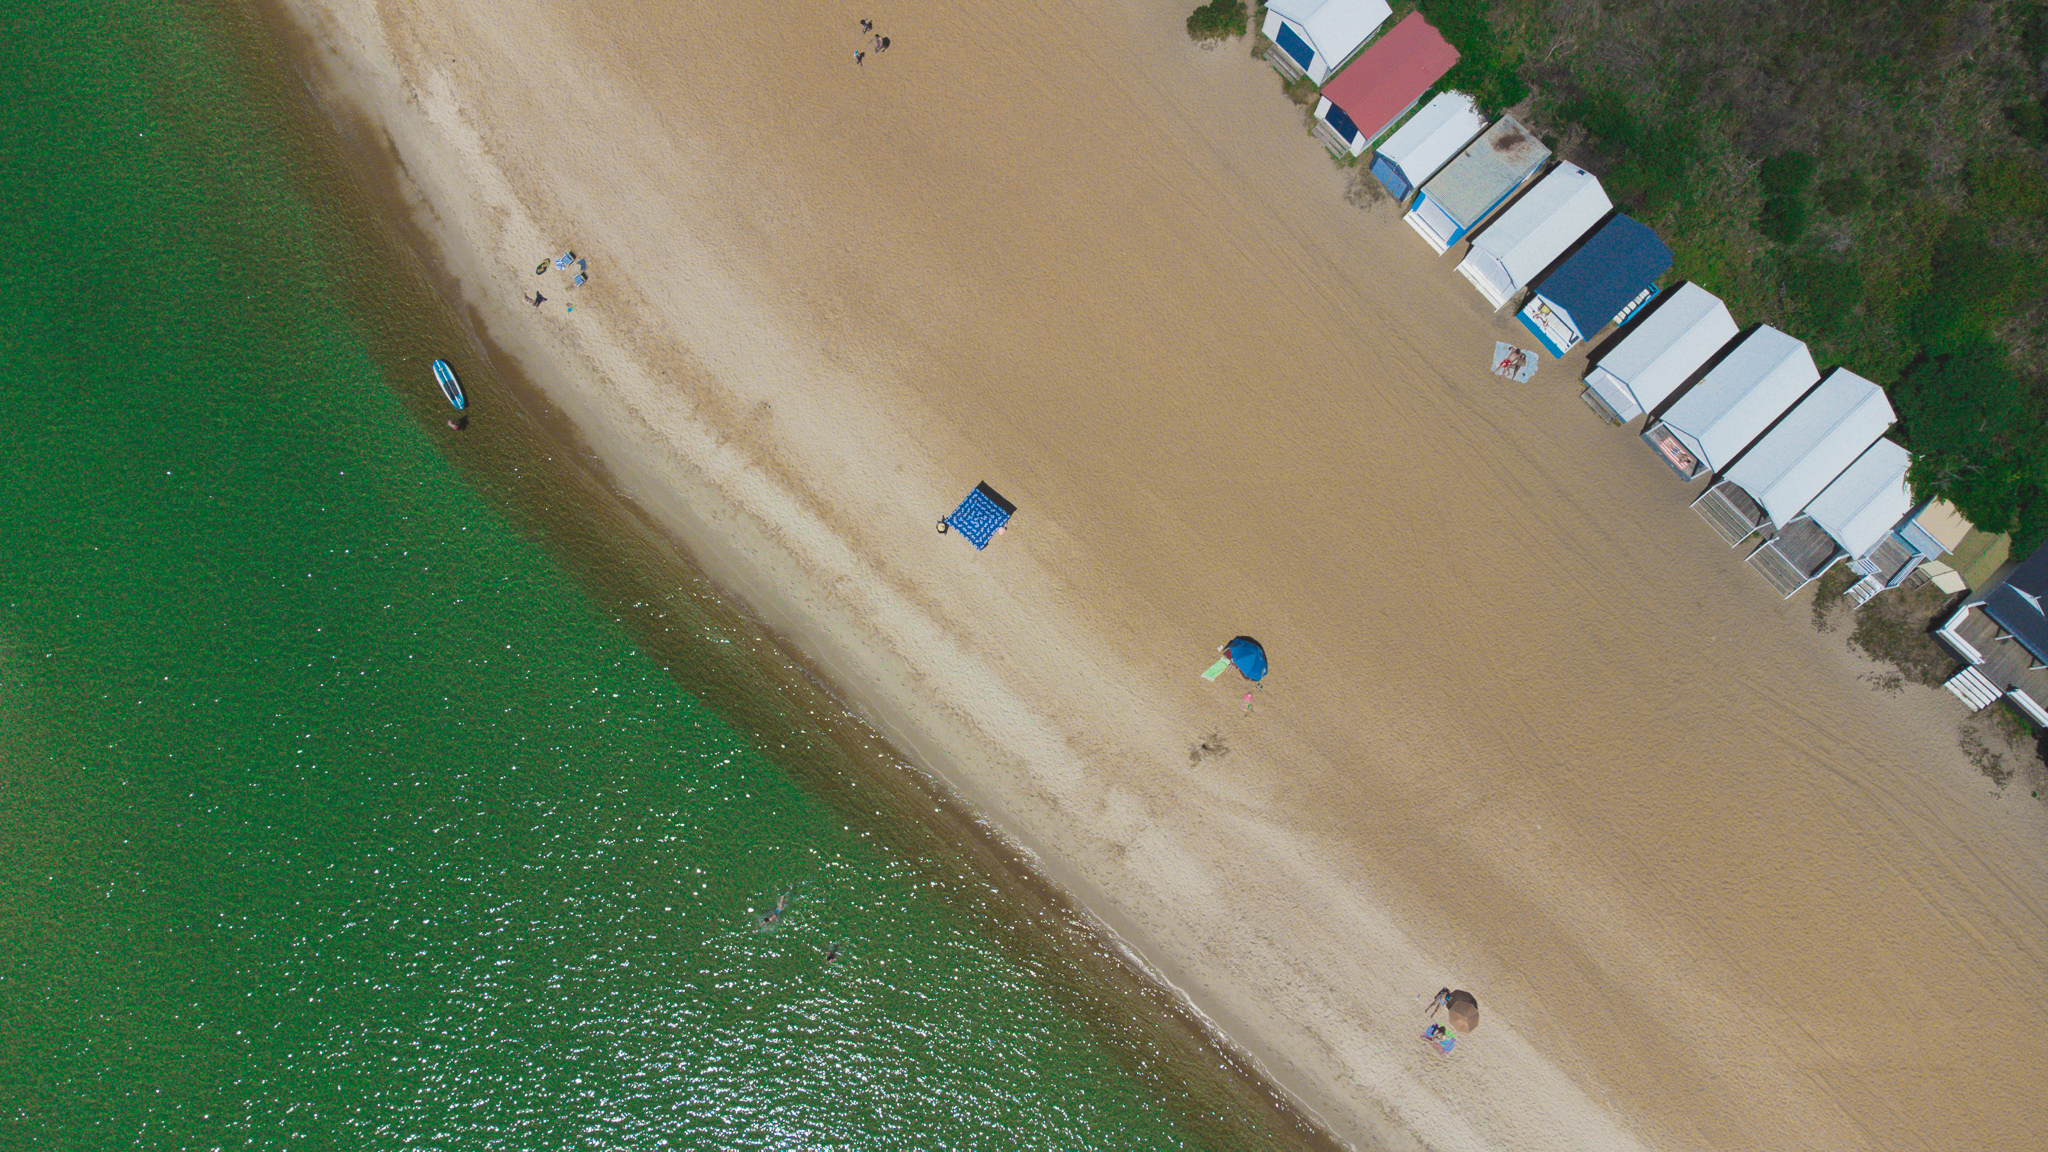 Mount martha beach summer drone mornington peninsula